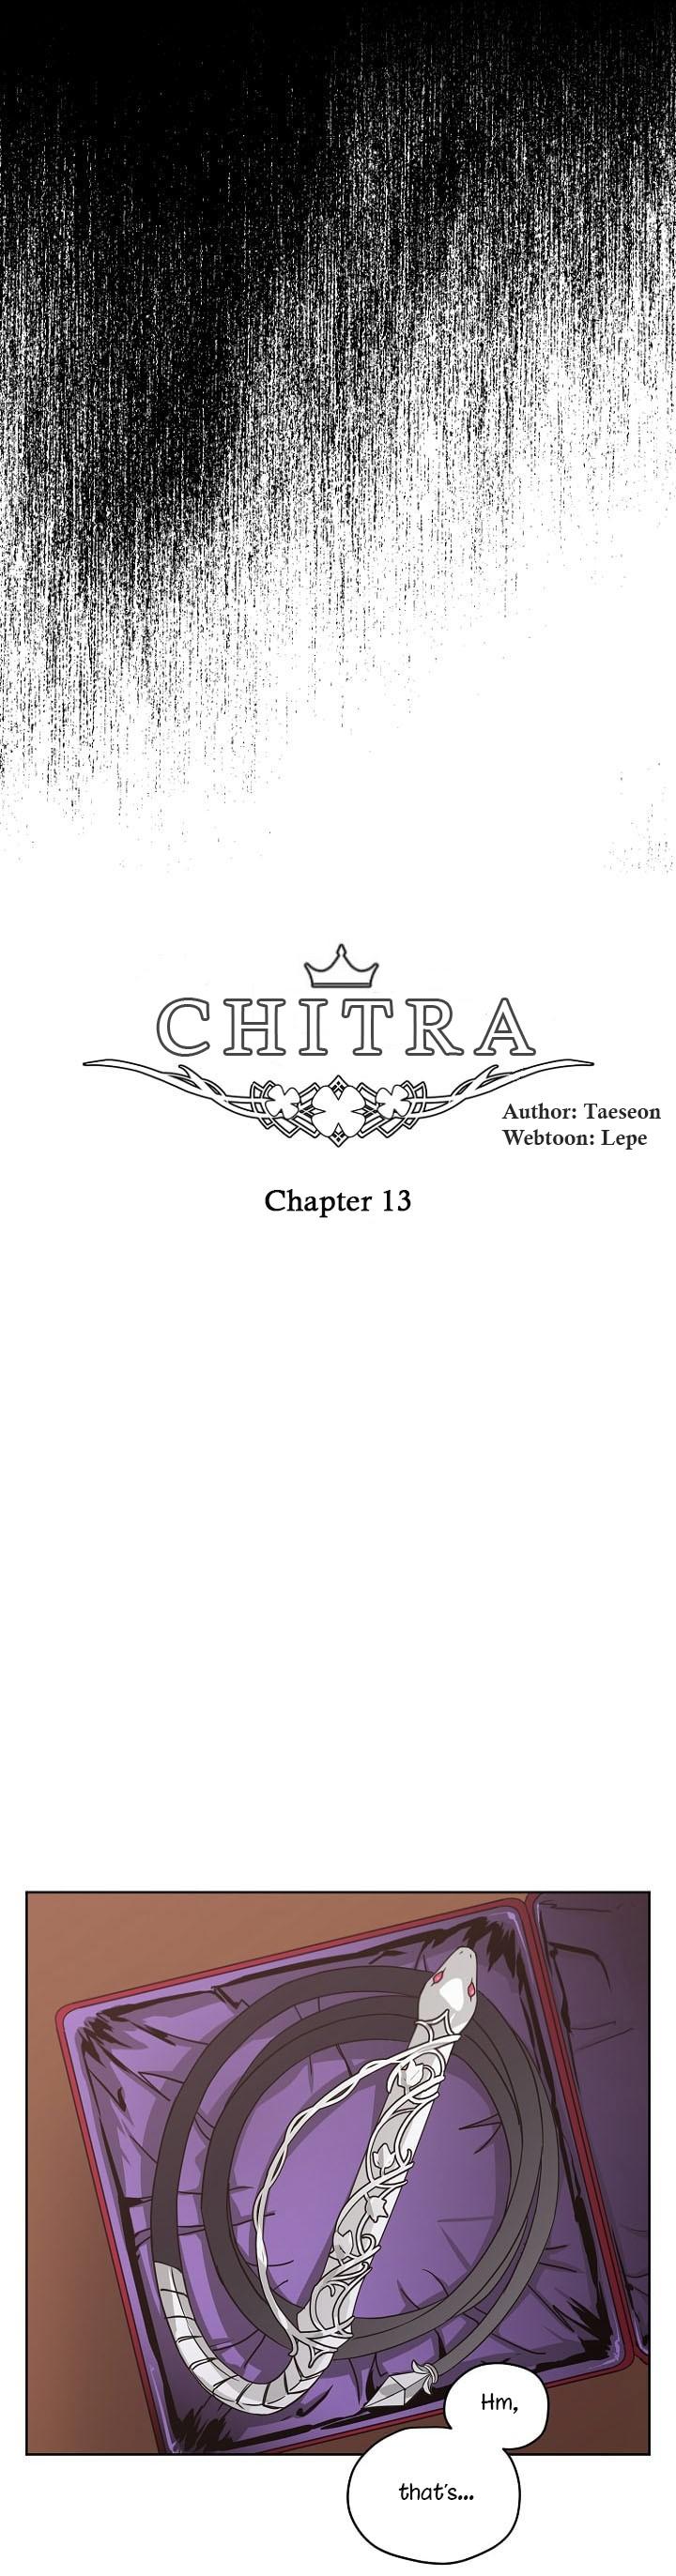 Chitra chapter 13